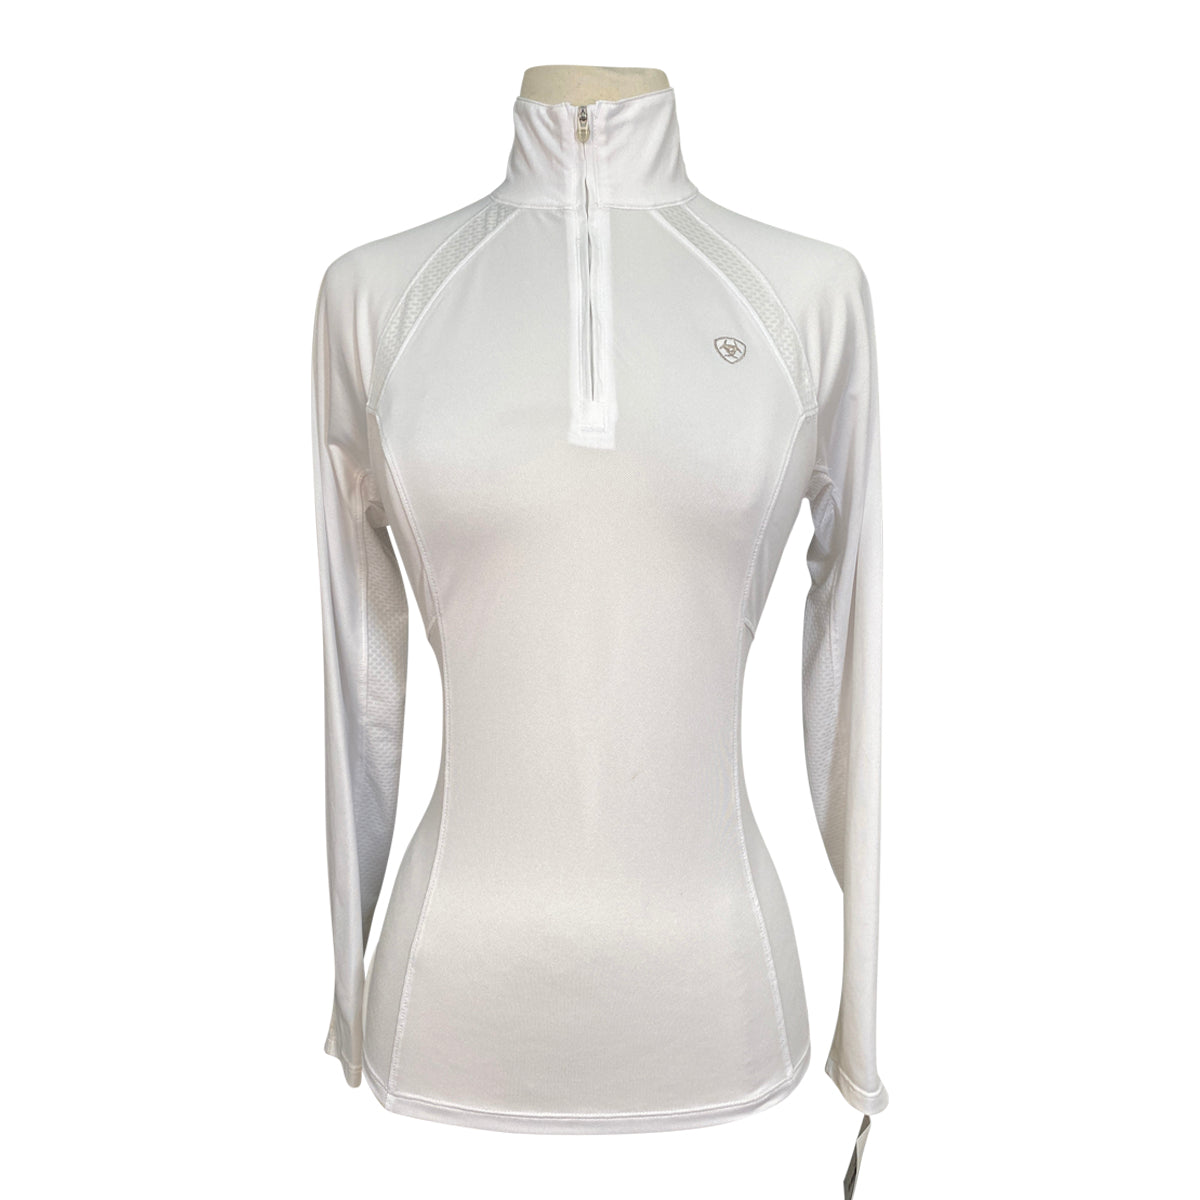 Ariat TEK Heat Series 1/4 Zip Shirt in White